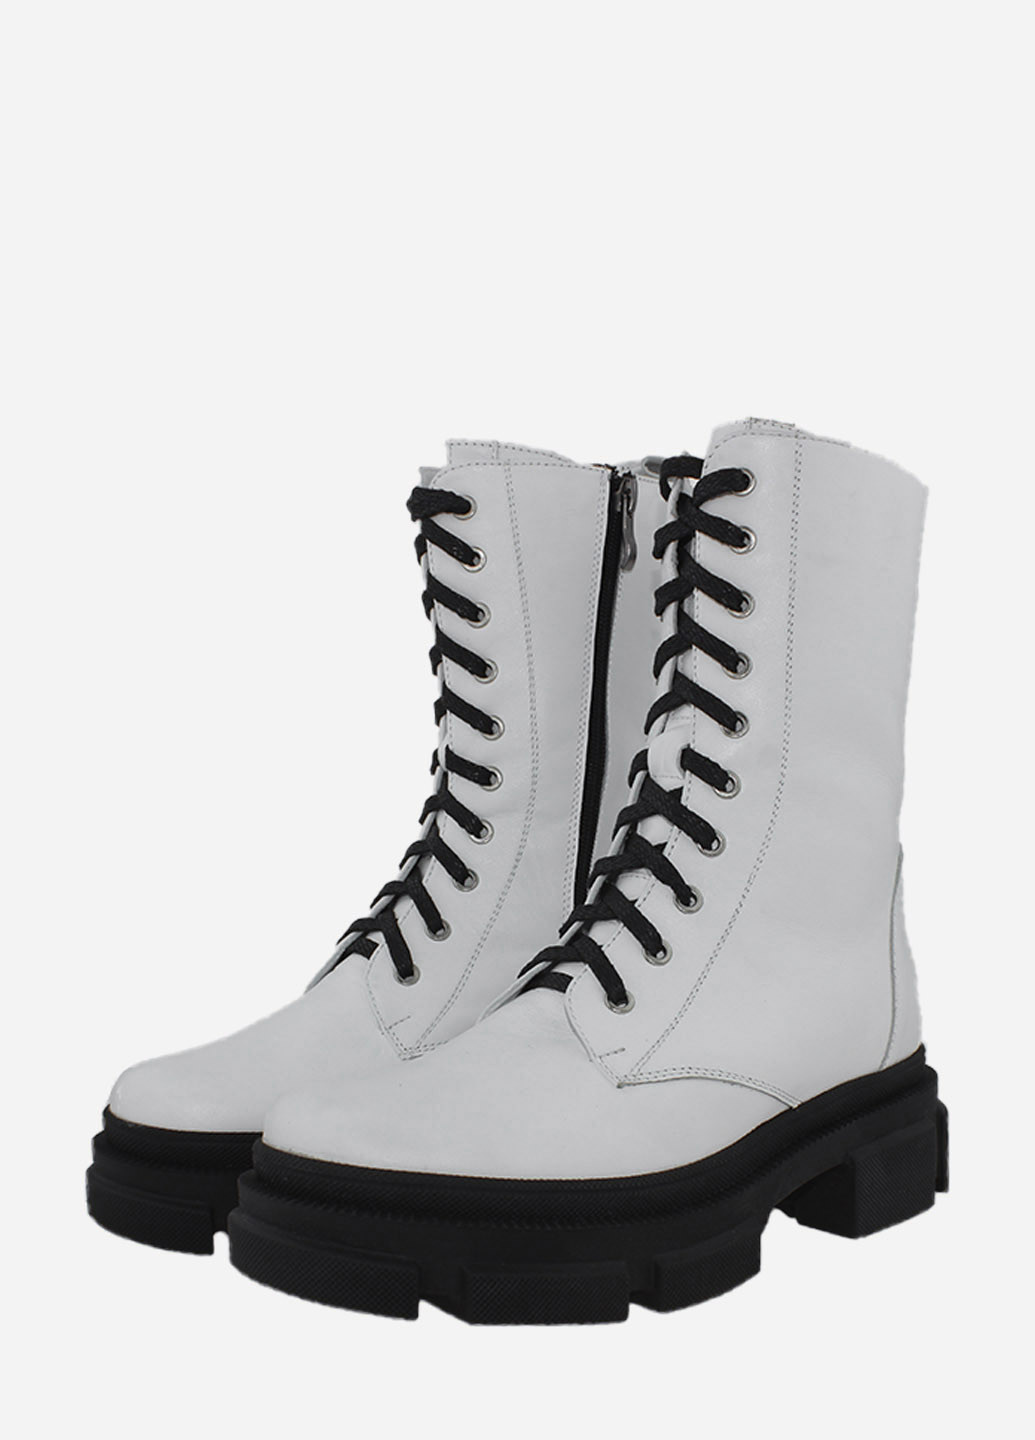 Зимние ботинки p.alina rp261-3 белый Palina